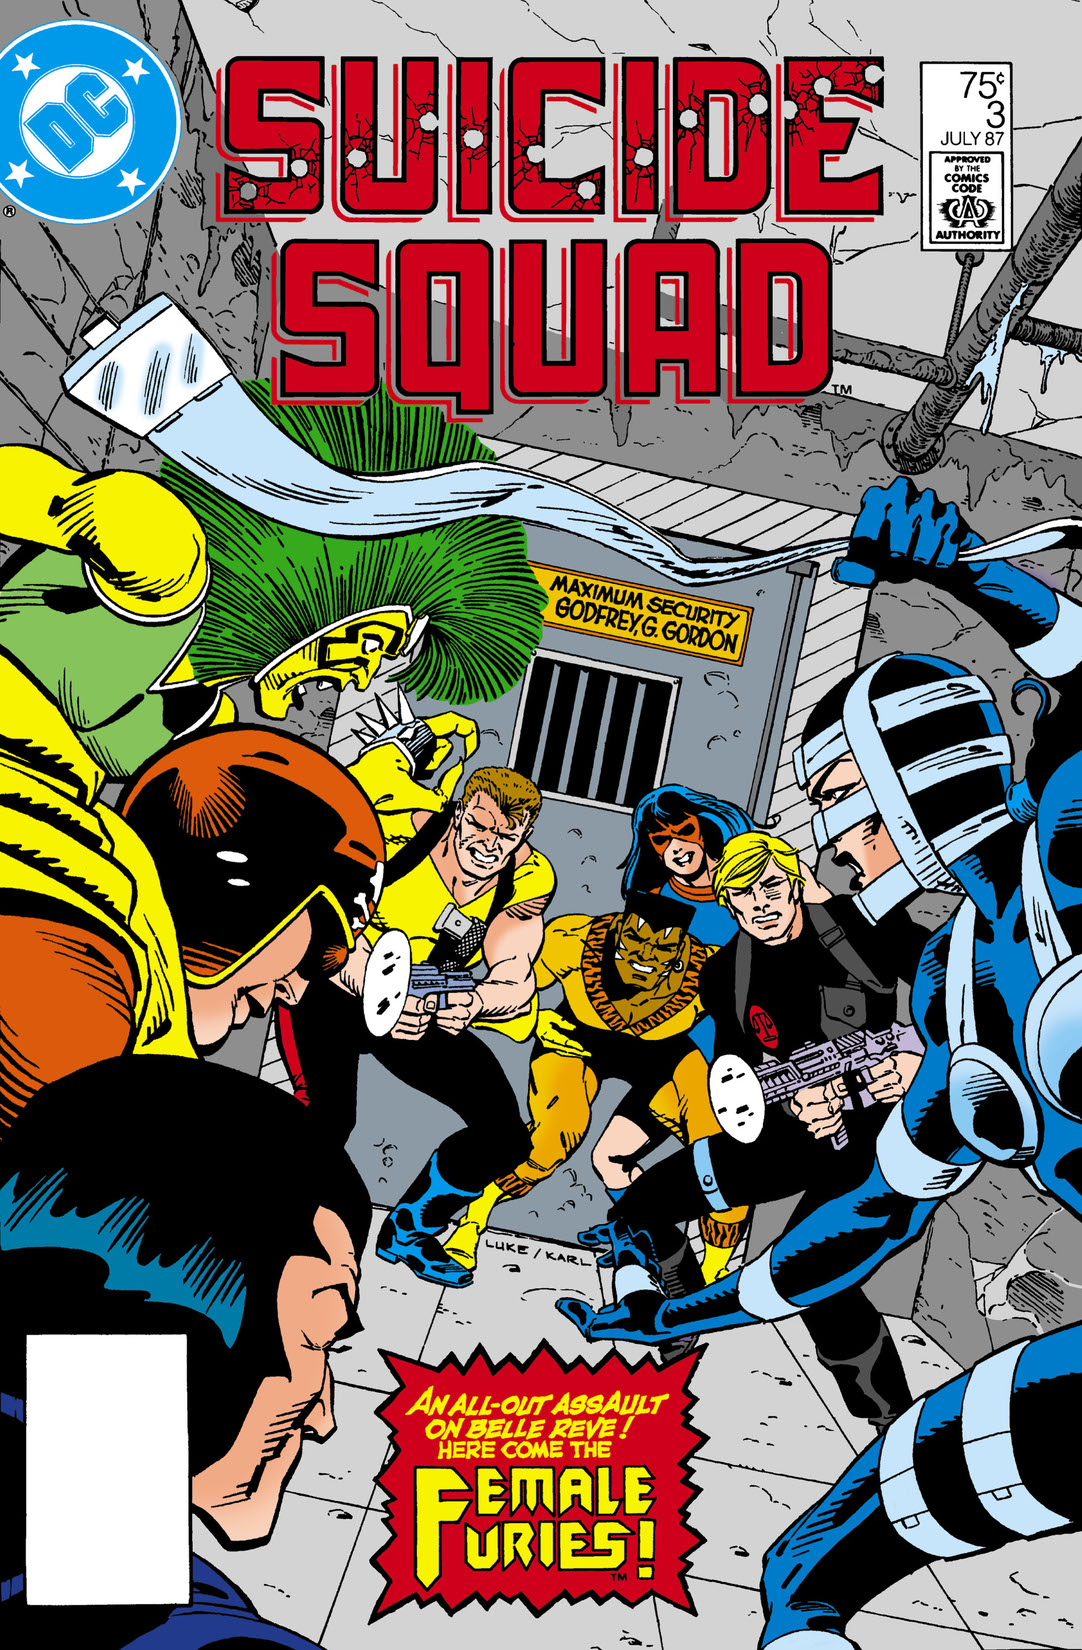 Suicide Squad (1987-) #3 preview images